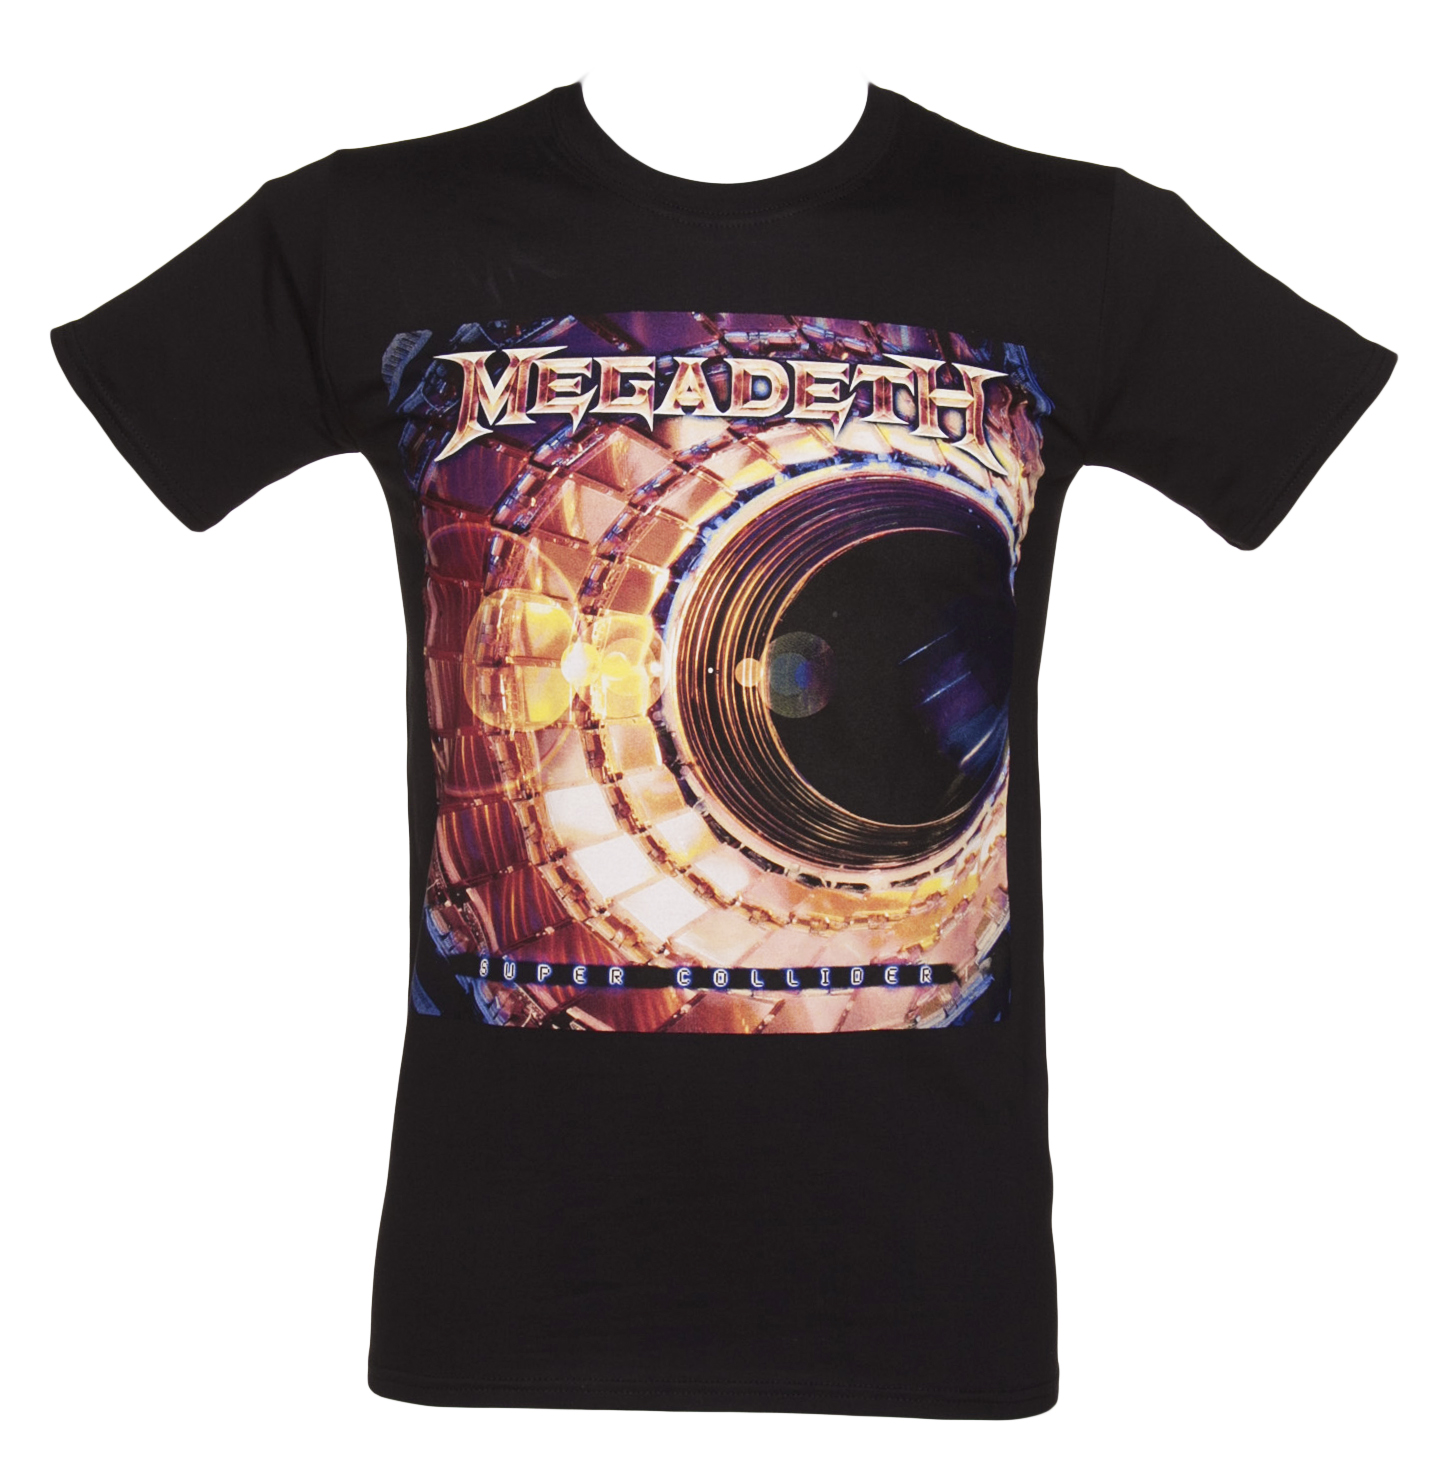 Mens Black Super Collider Megadeth T-Shirt